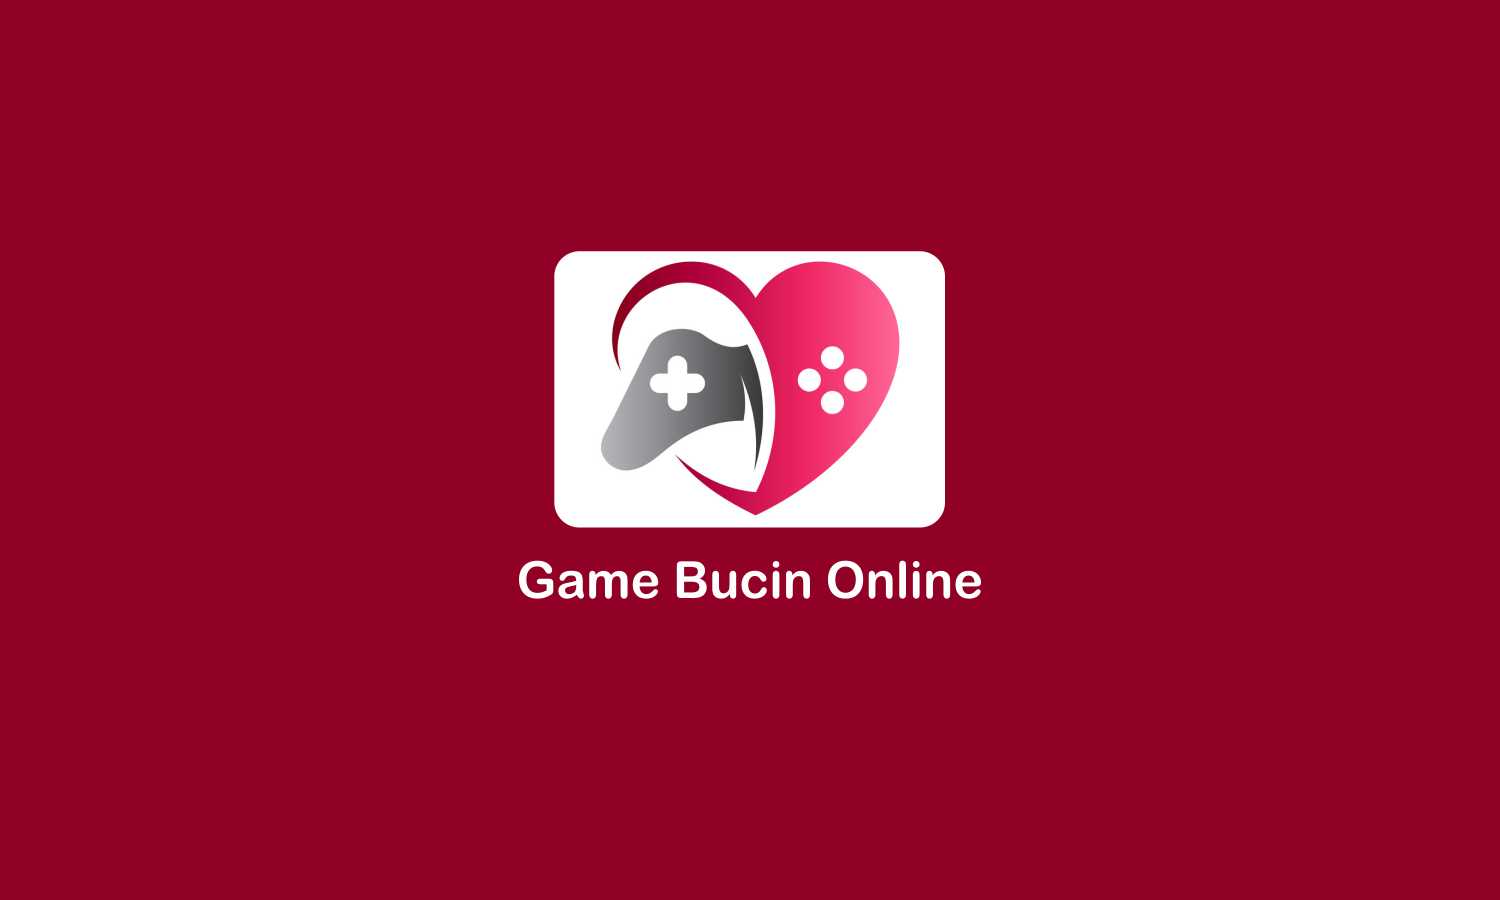 Game Bucin Online